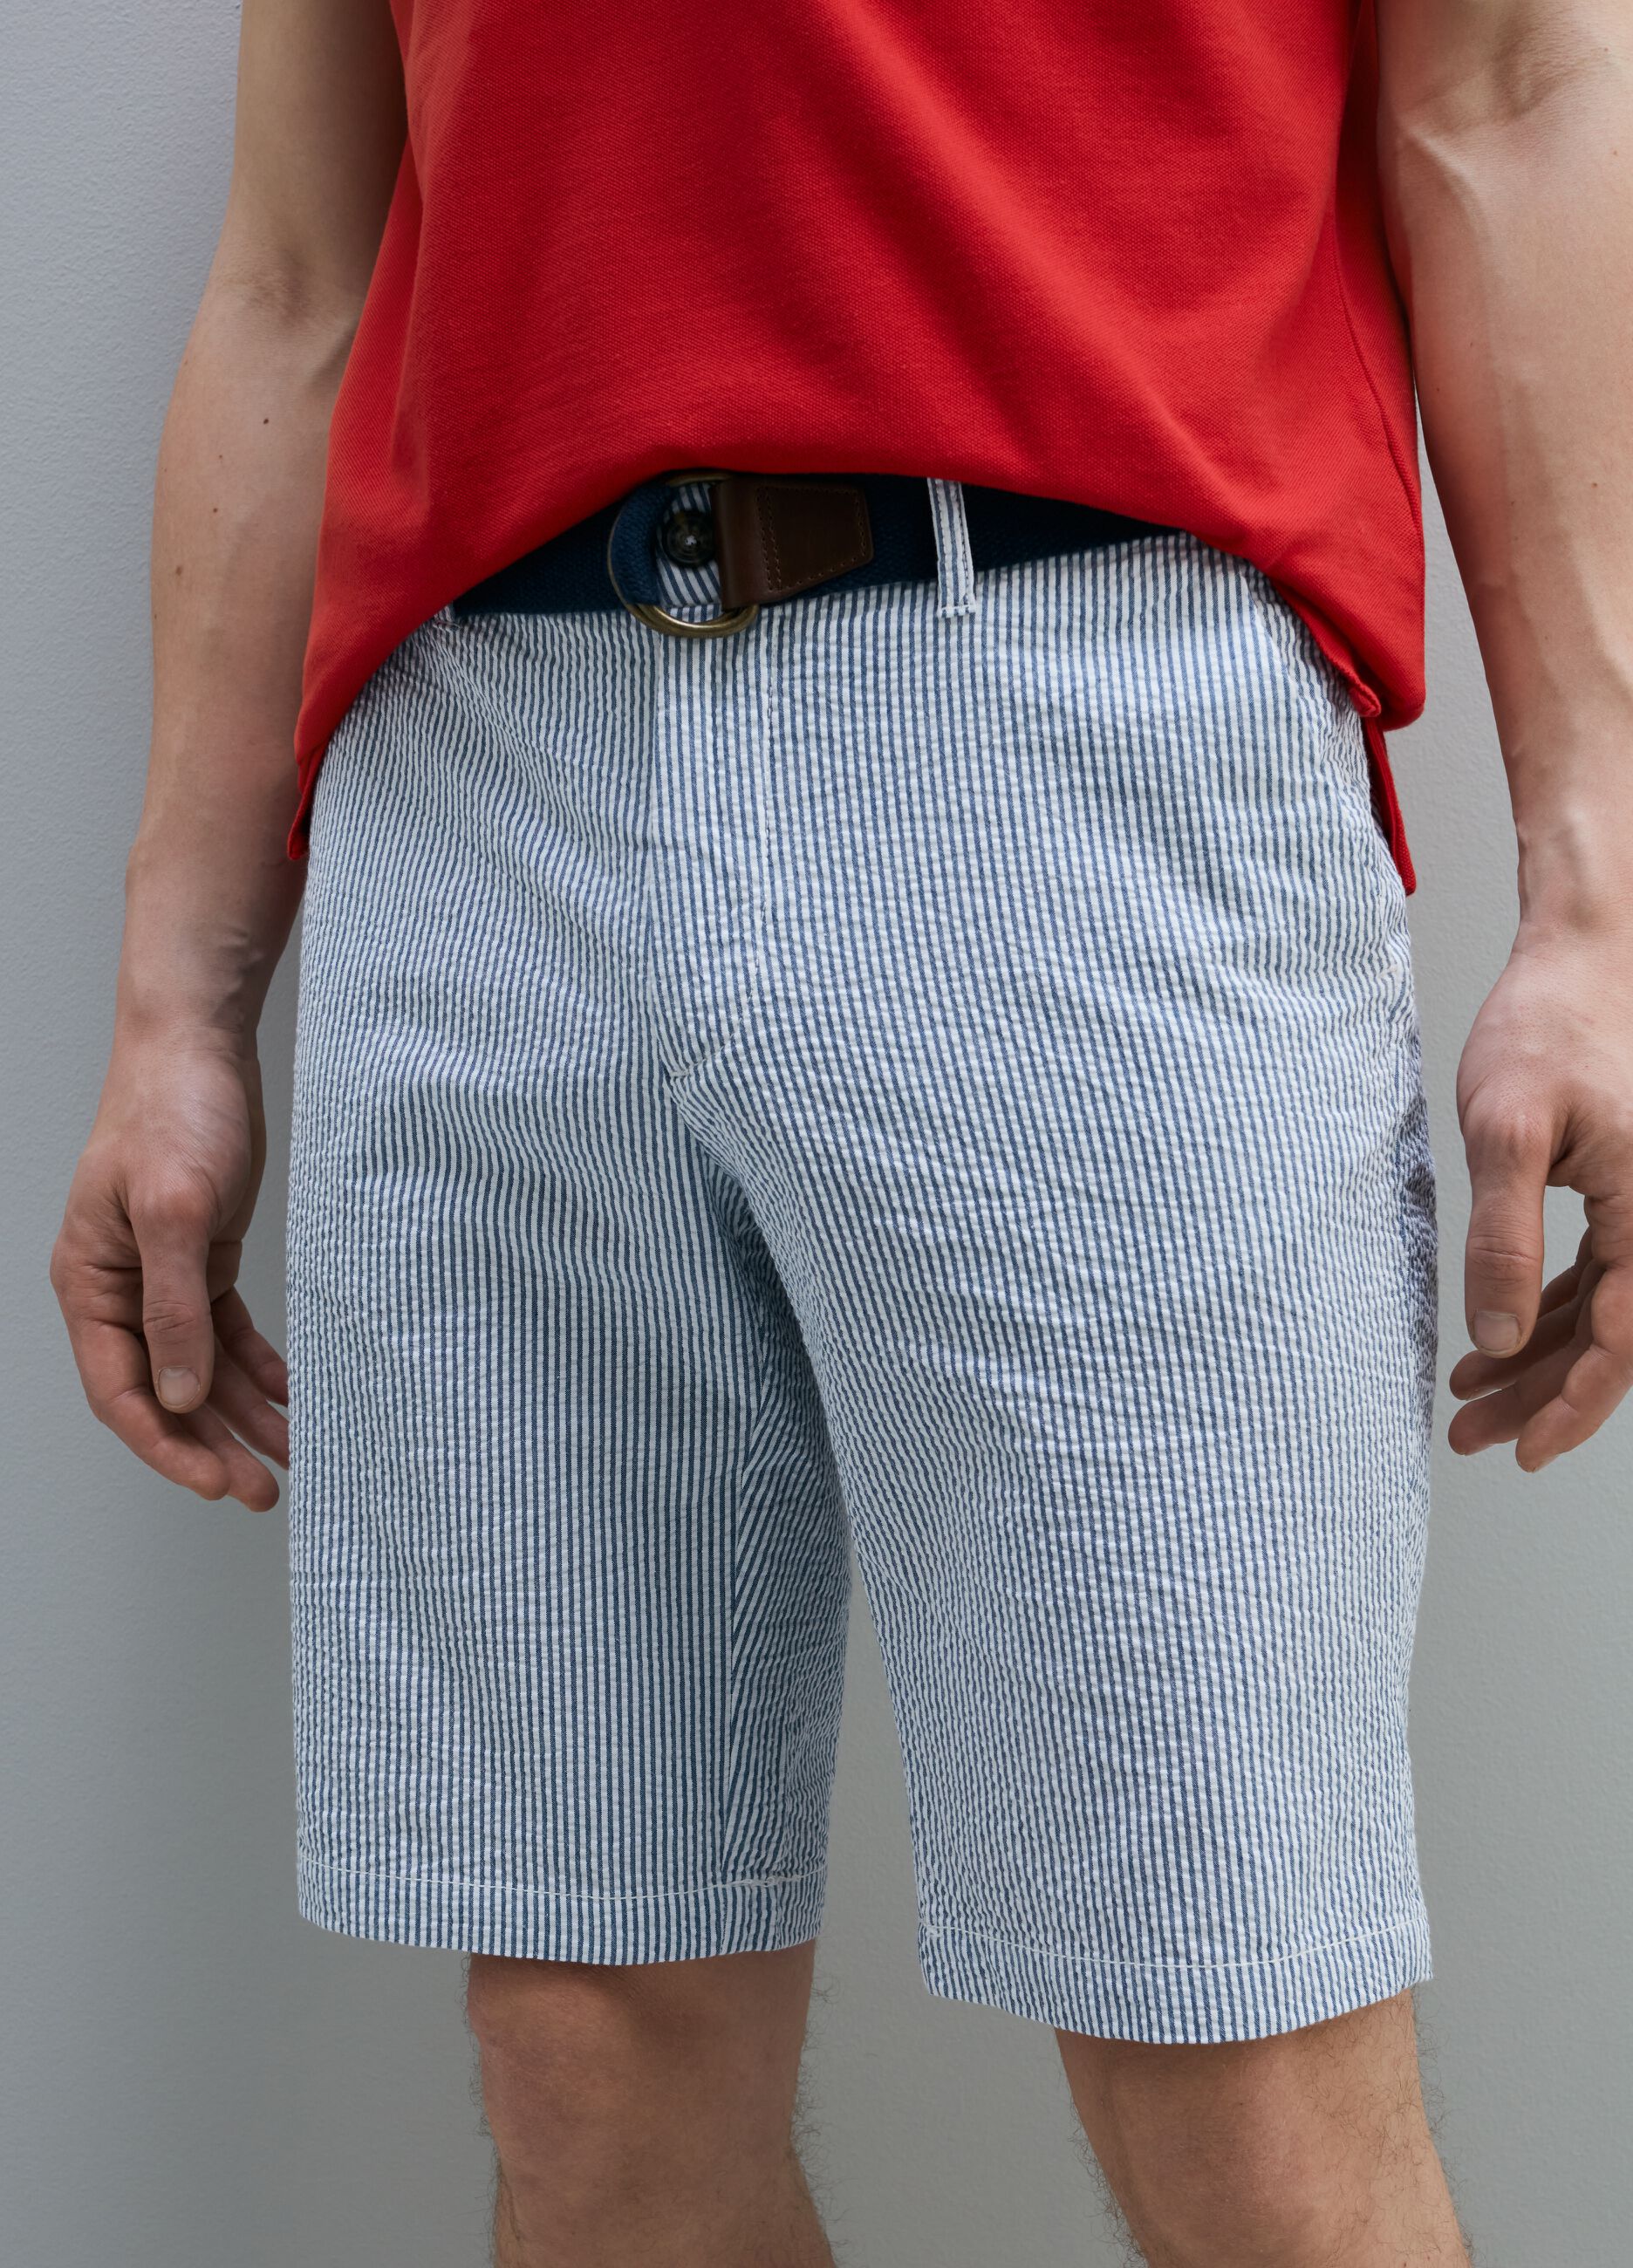 Chino Bermuda shorts in striped seersucker